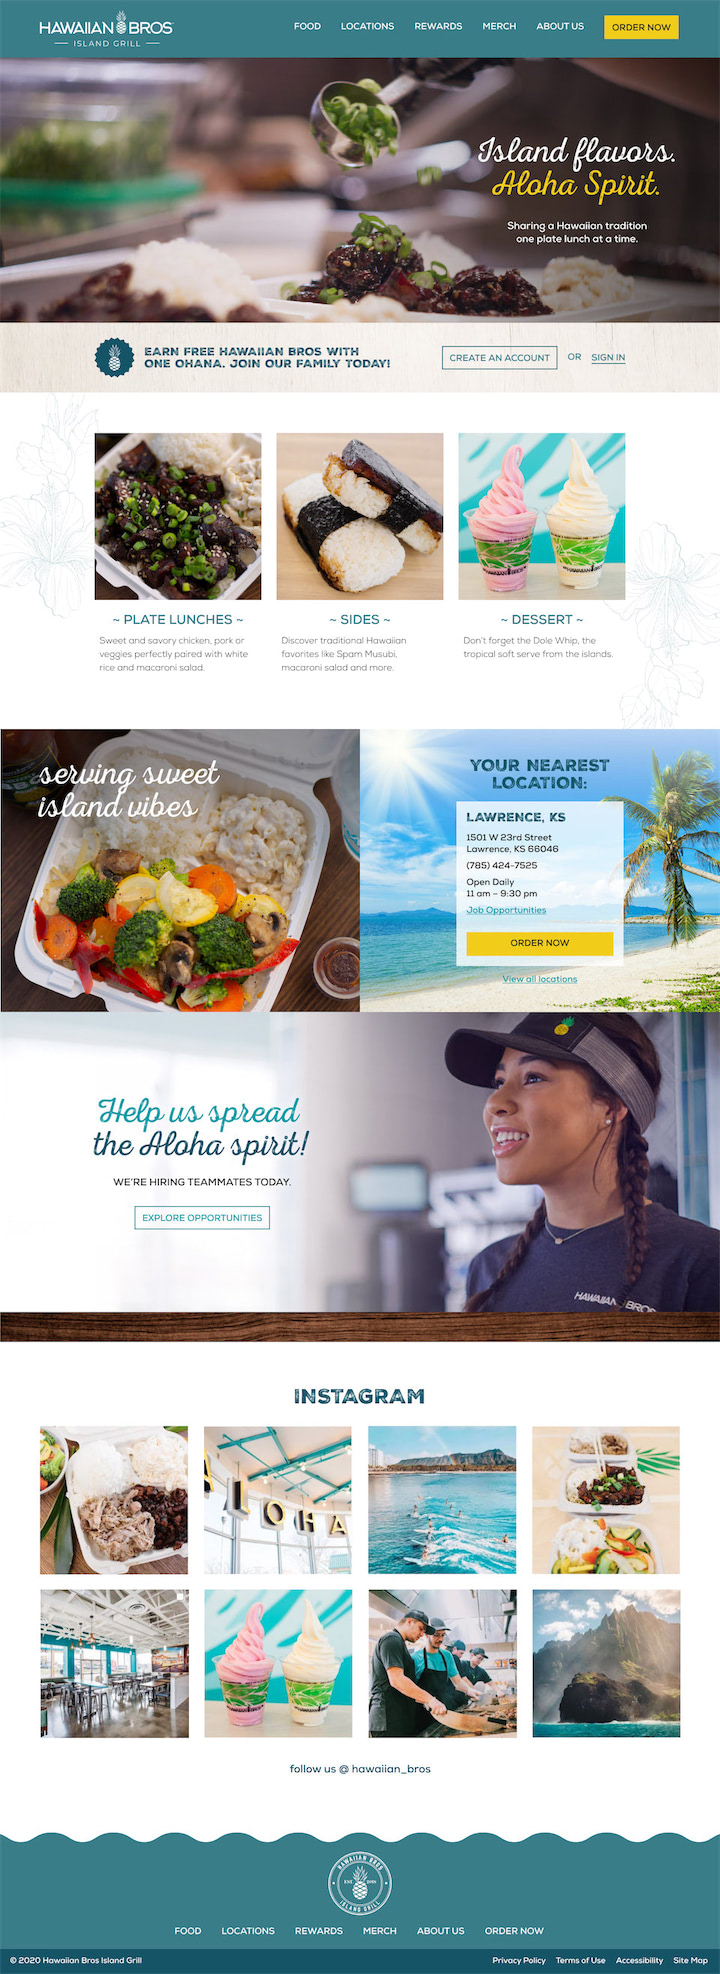 Hawaiian Bros website design